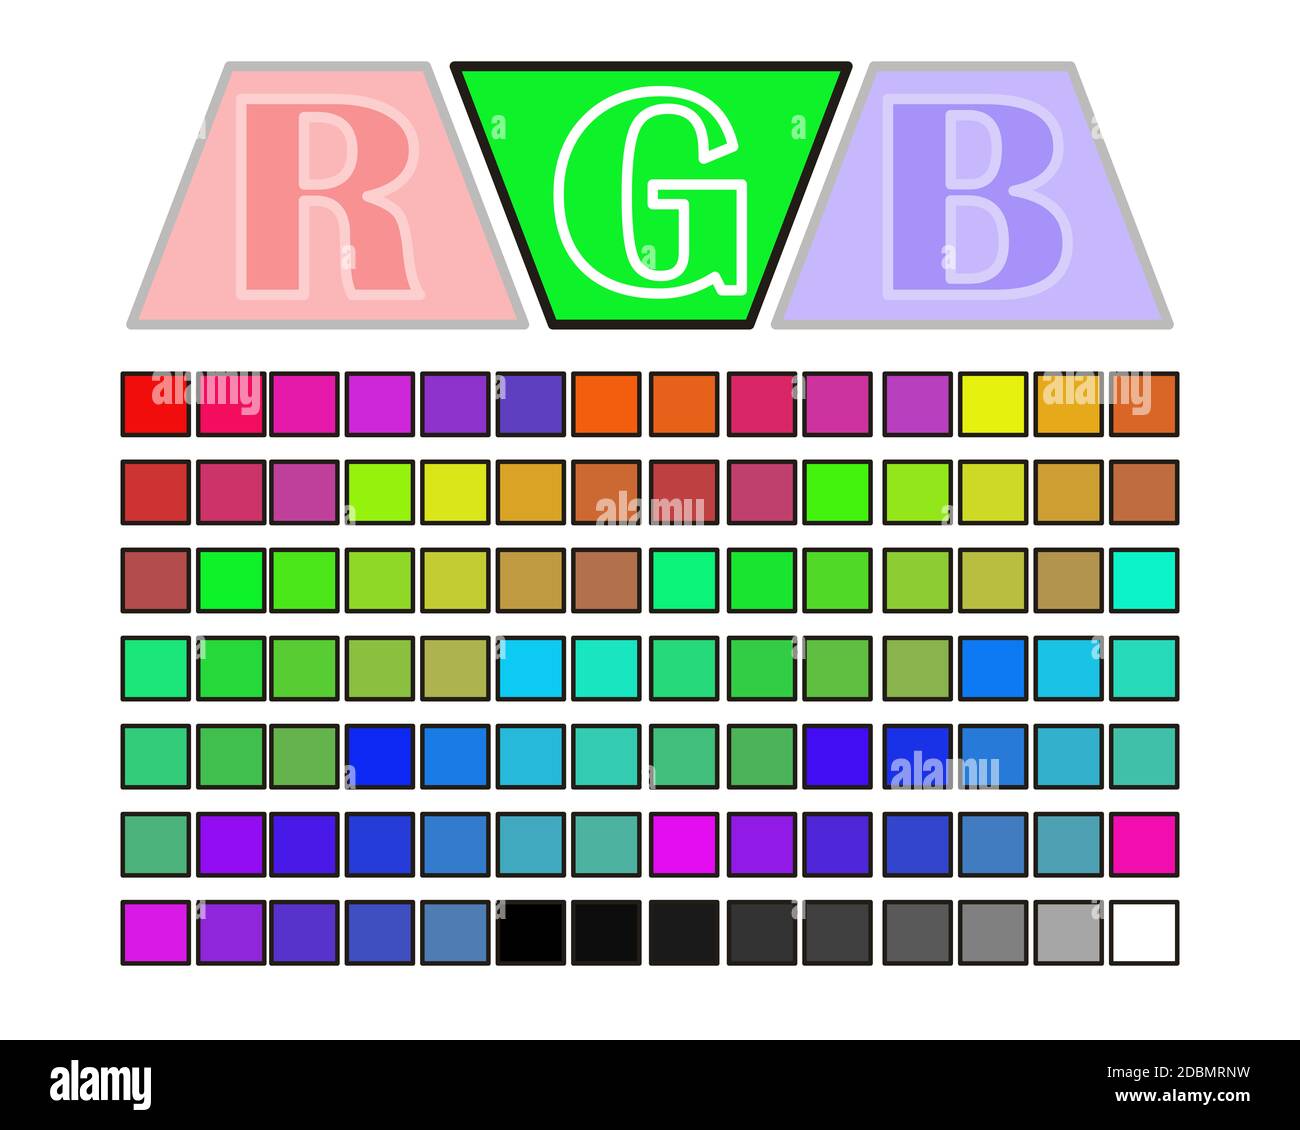 Block colours design on a white background with one dominating colour - green dominating colour. Stock Photo